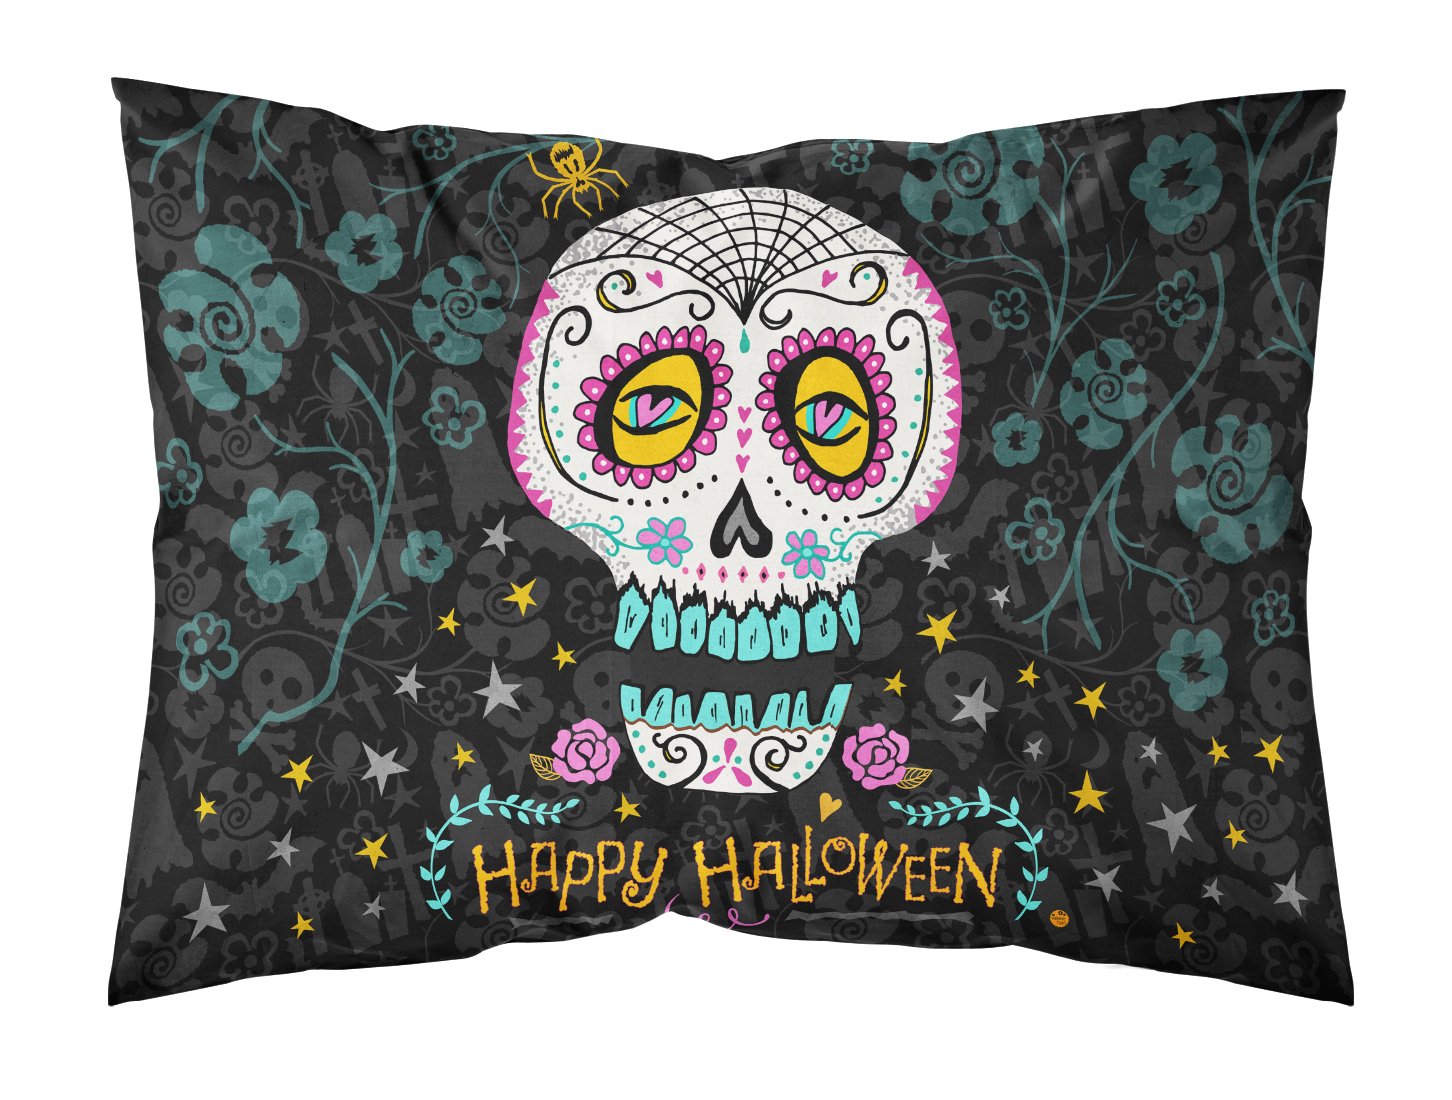 Happy Halloween Day of the Dead Fabric Standard Pillowcase VHA3035PILLOWCASE by Caroline's Treasures